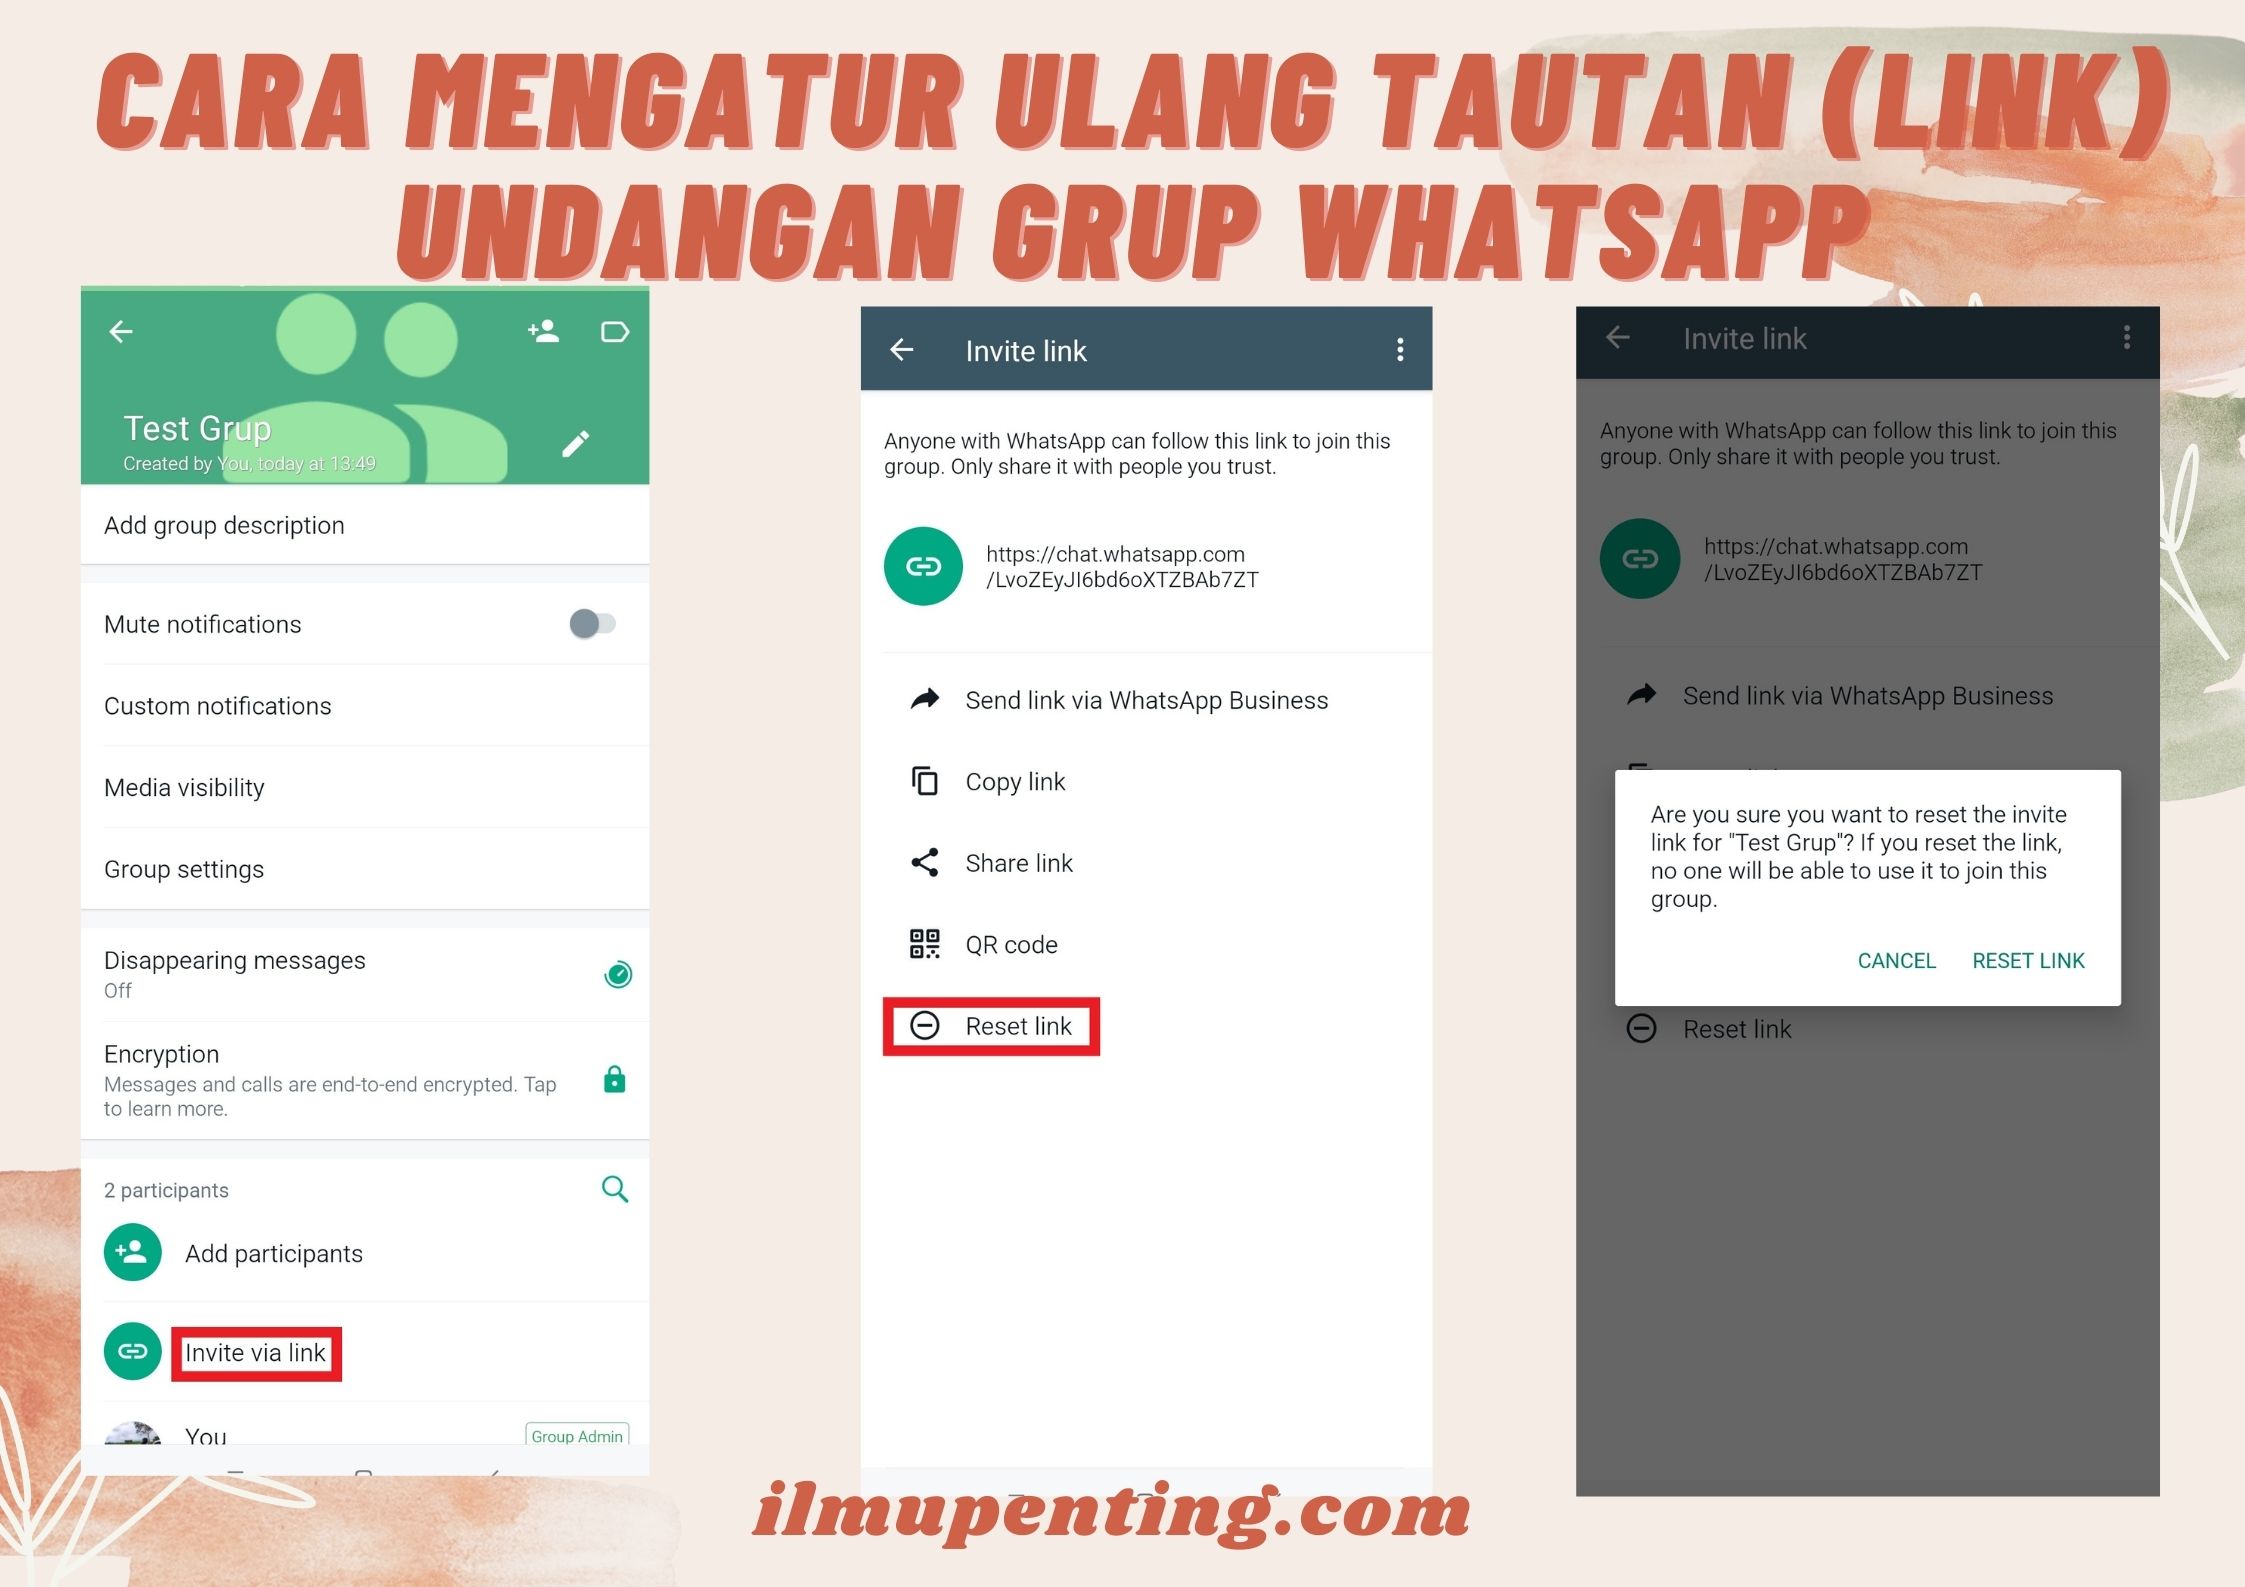 Cara Mengatur Ulang Tautan (Link) Undangan Grup WhatsApp